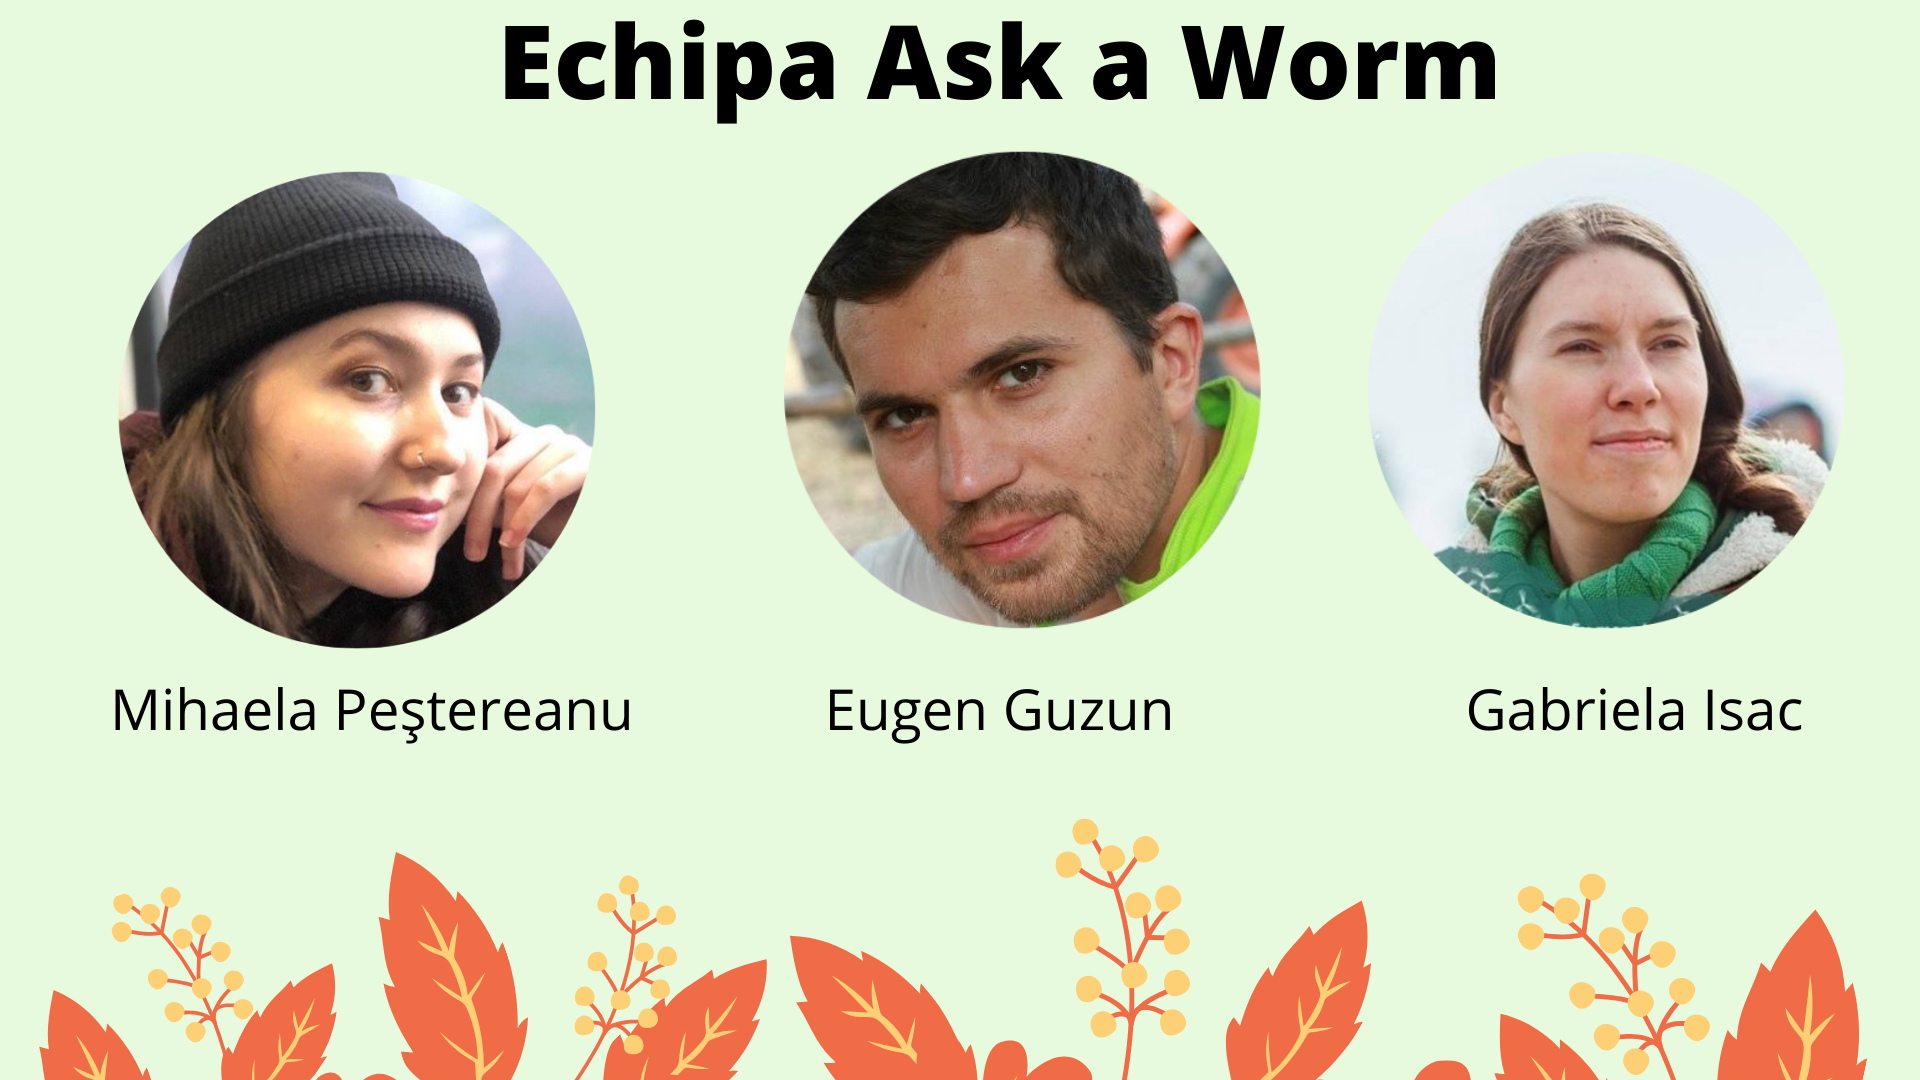 Echipa Ask a Worm